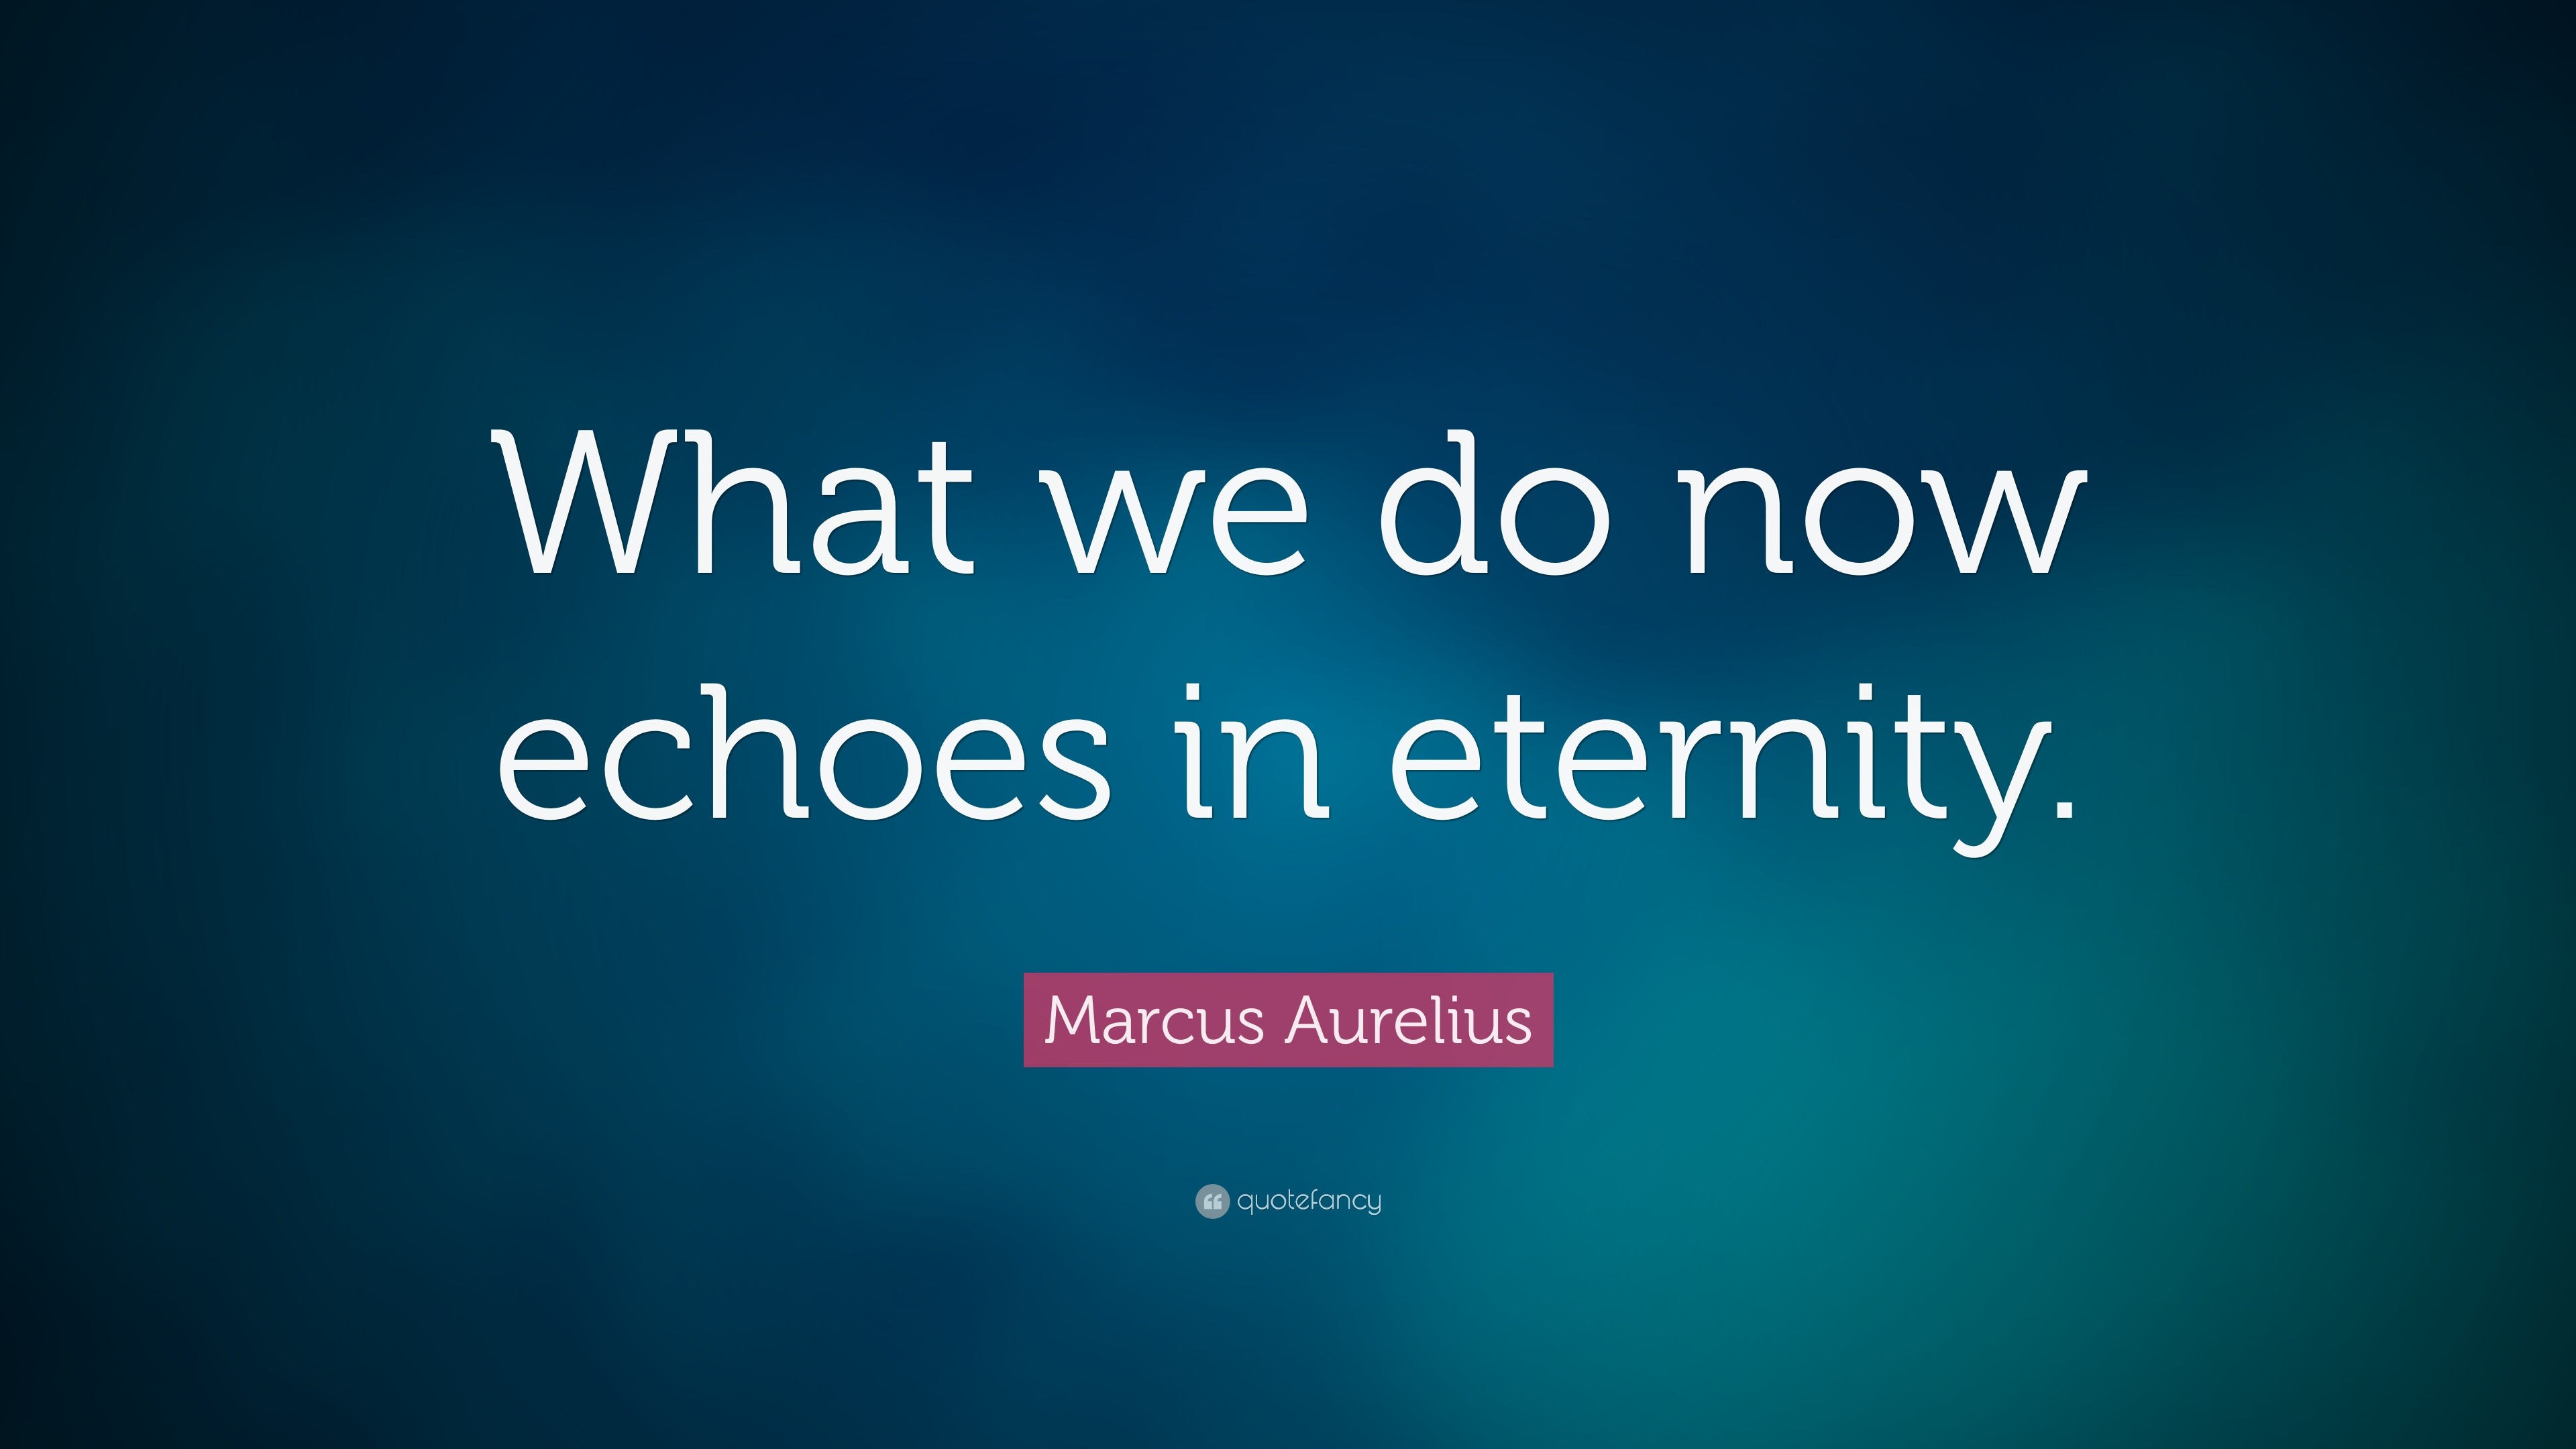 Marcus Aurelius Quote: “What we do now echoes in eternity.” (19